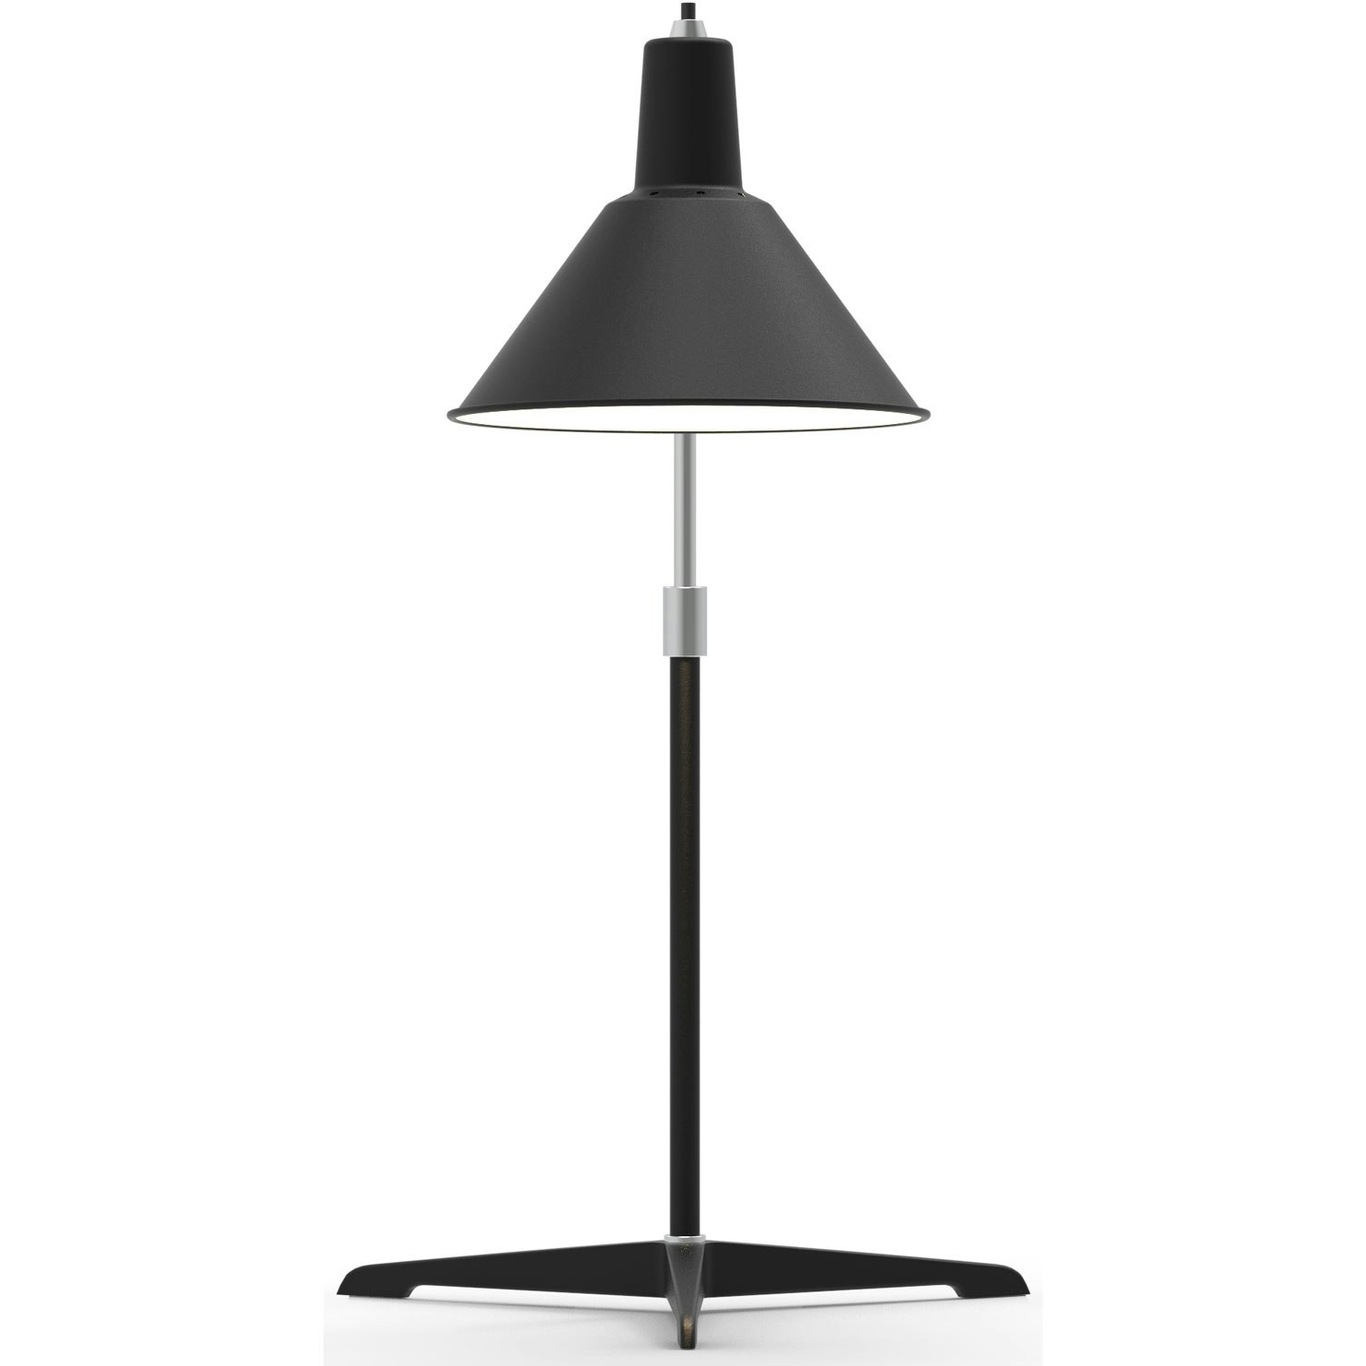 Arcon Table Lamp, Black / Chrome